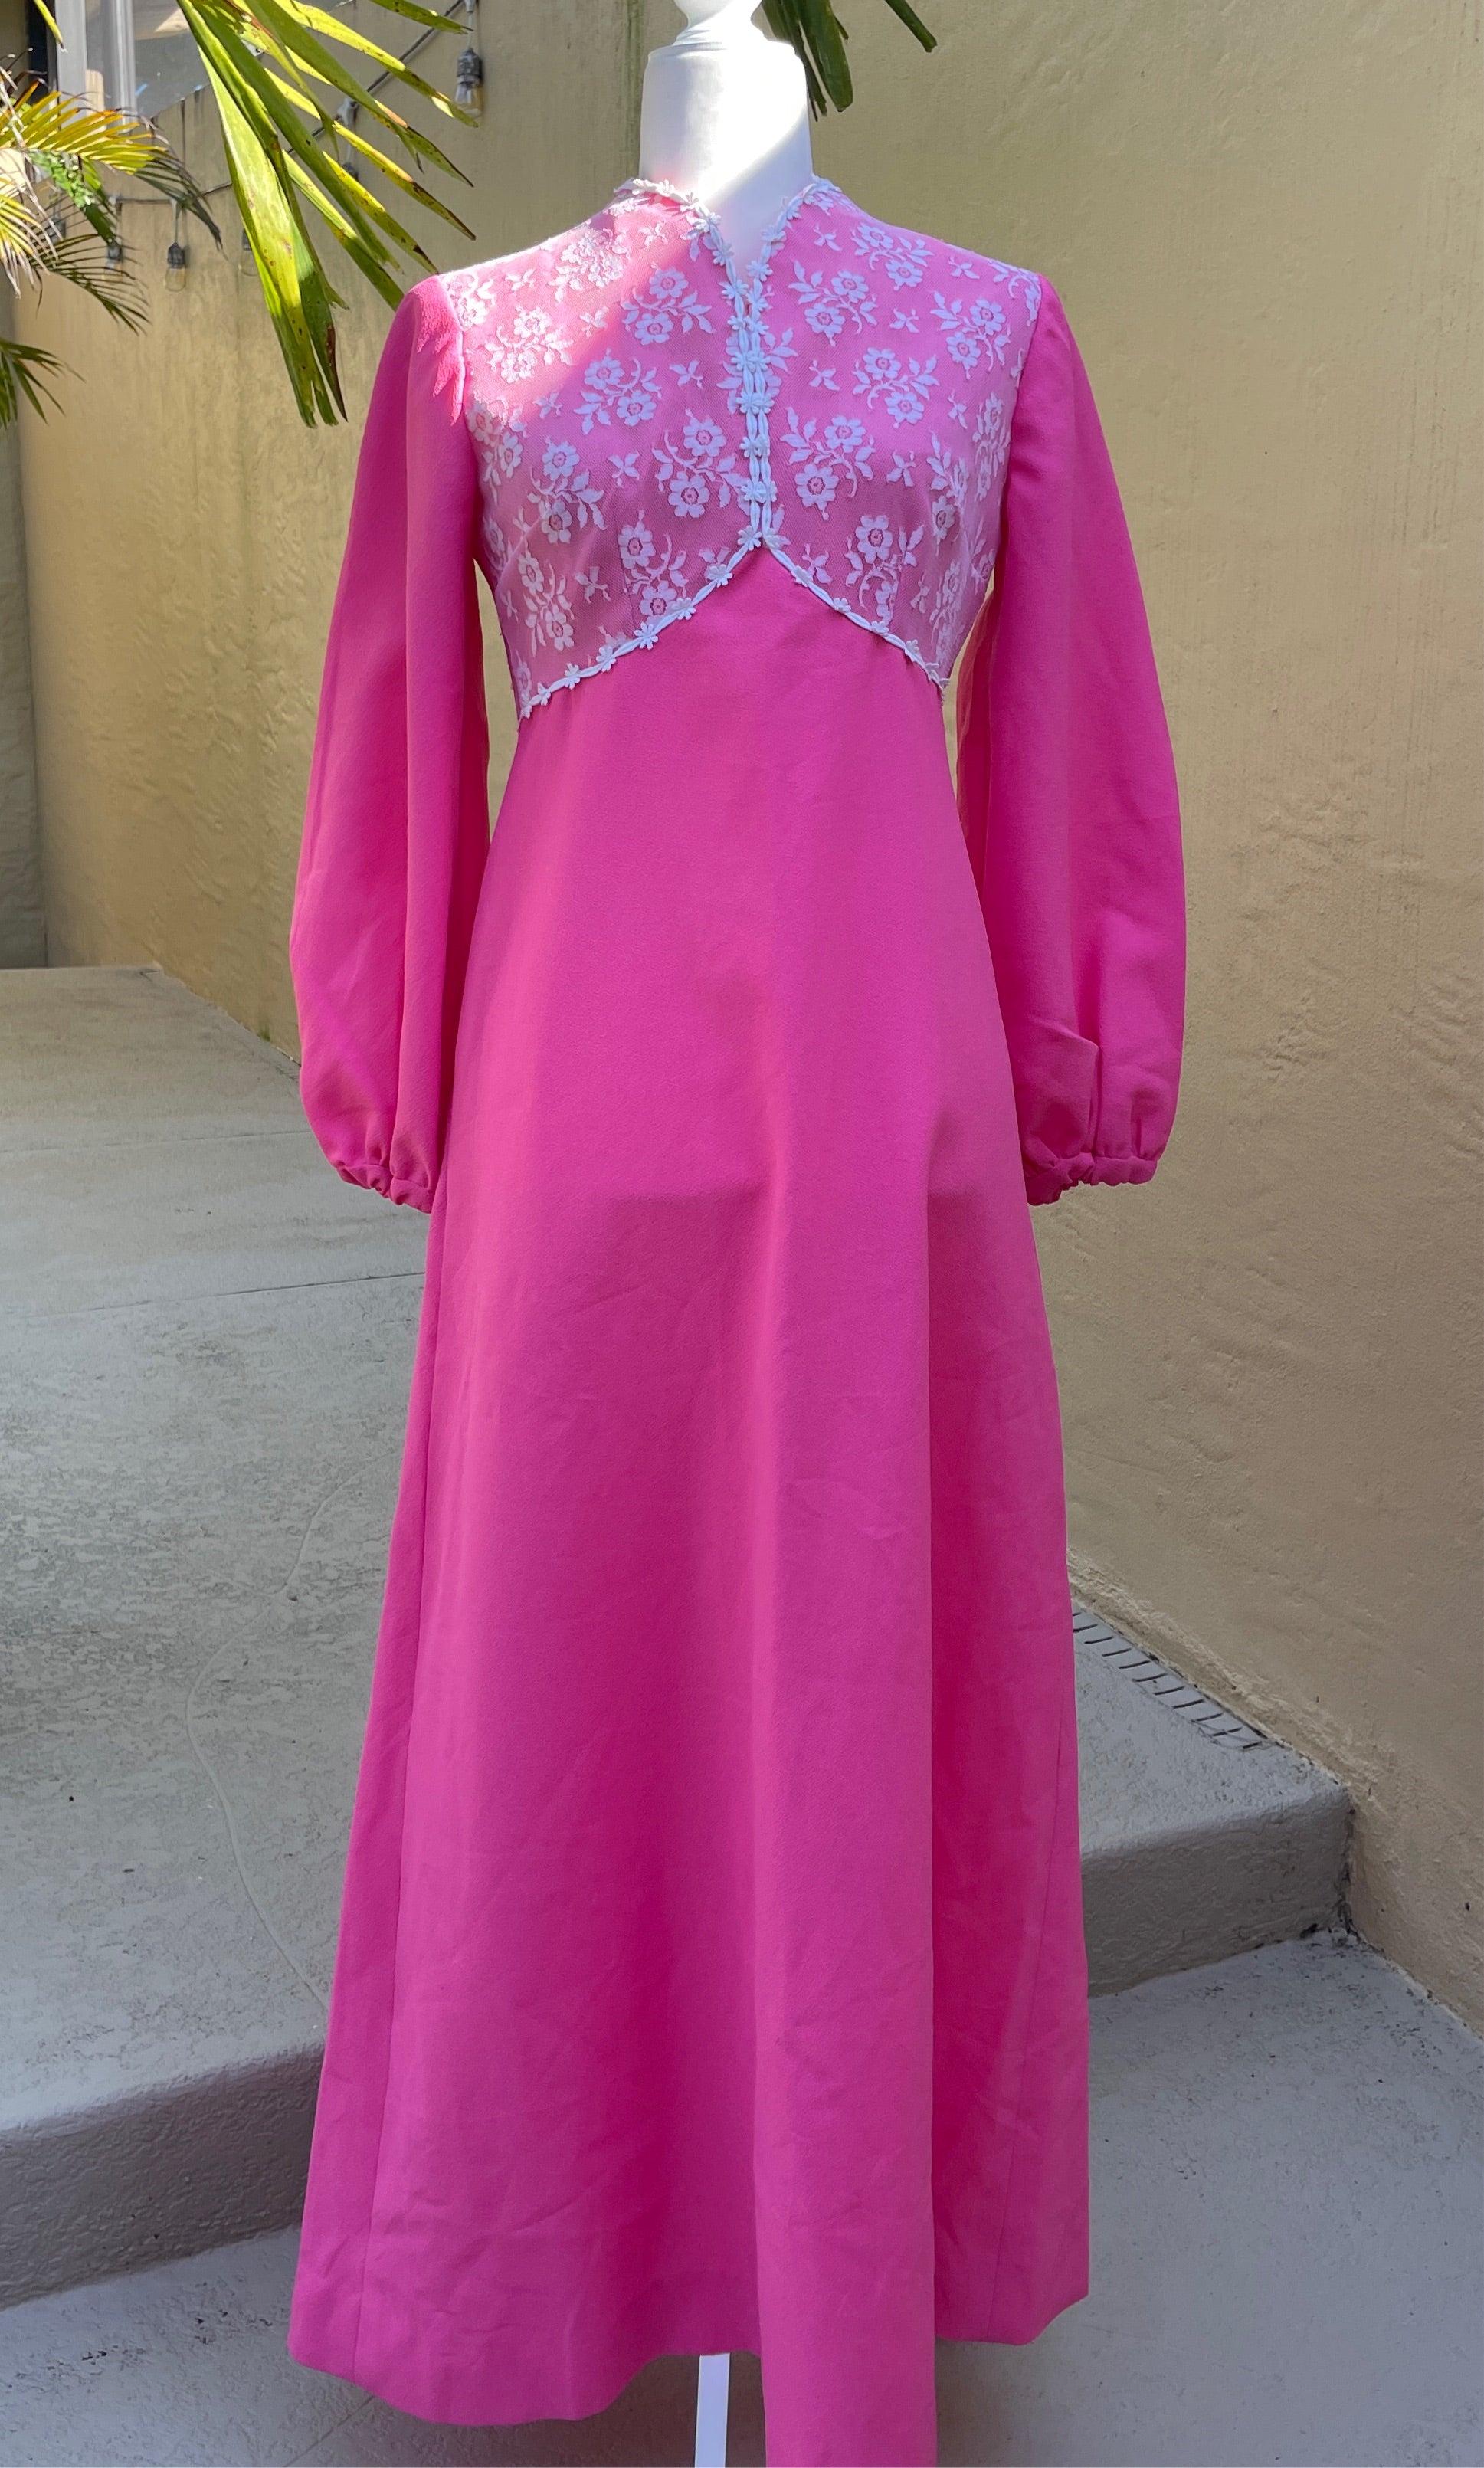 Pink 70s Romantic Handmade Maxi Dress S 70s Vintage Pink Lace Romantic Long Sleeve Handmade Maxi Dress S